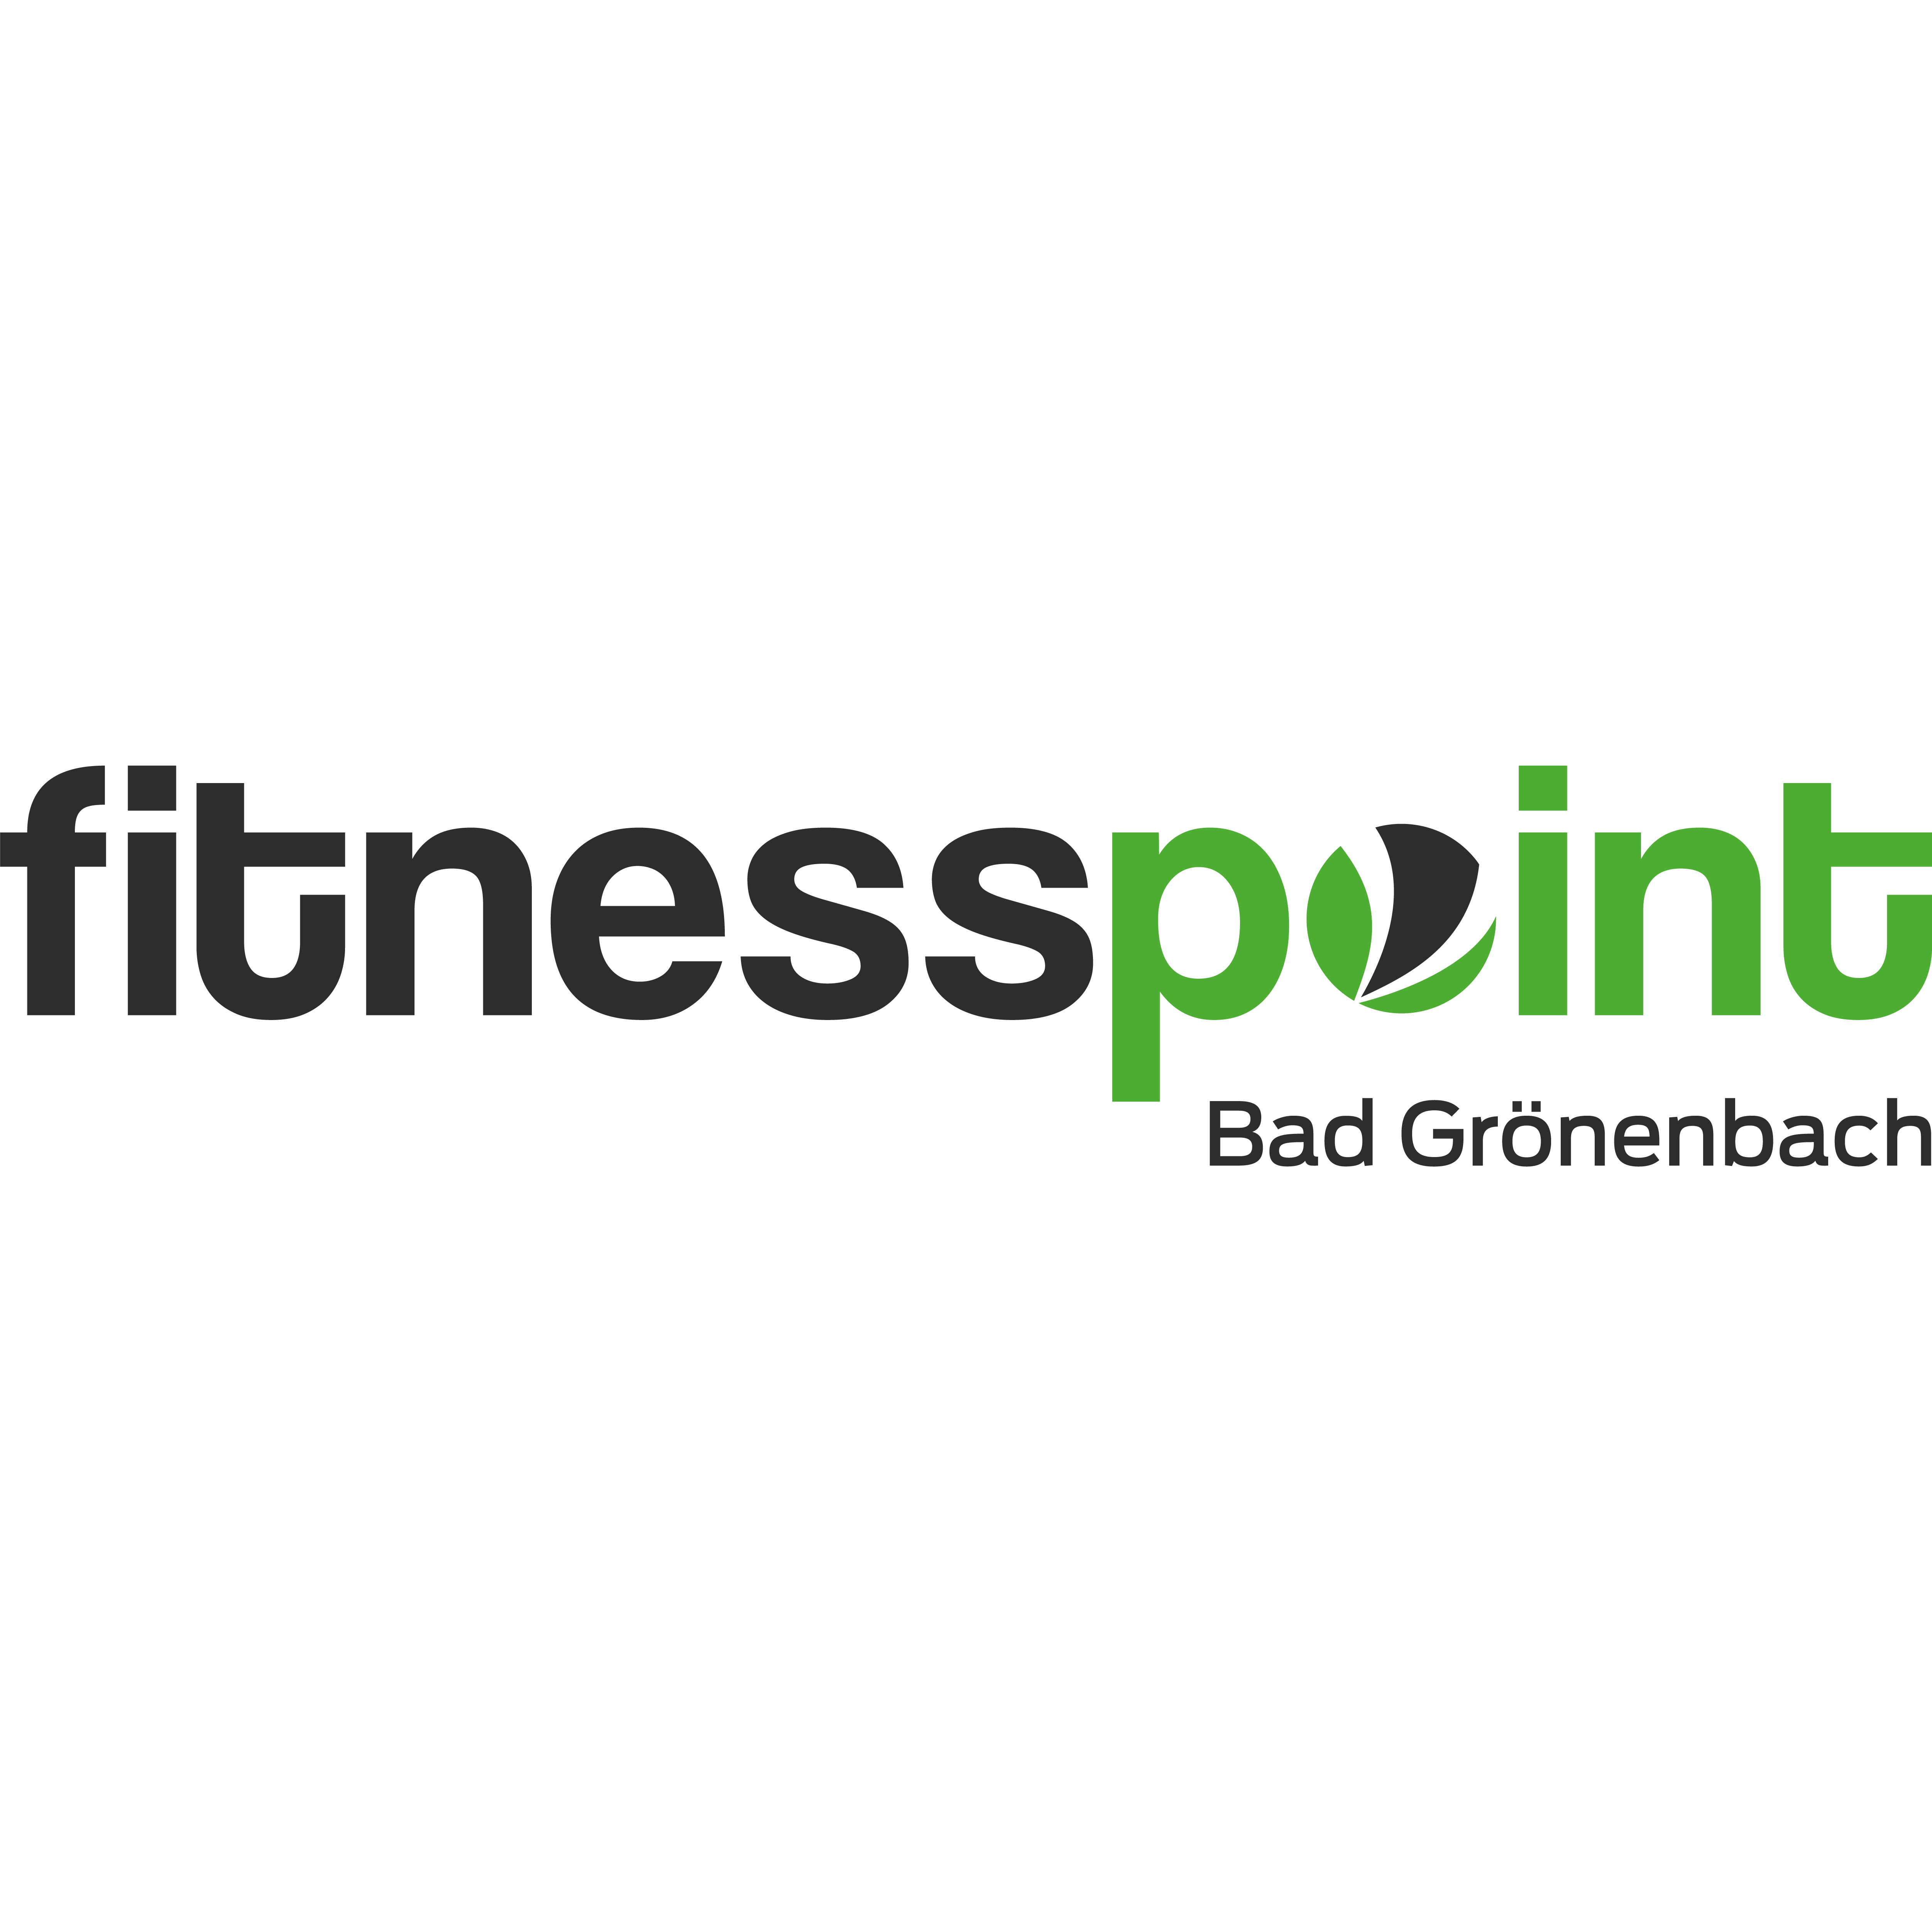 Fitnesspoint Bad Grönenbach  